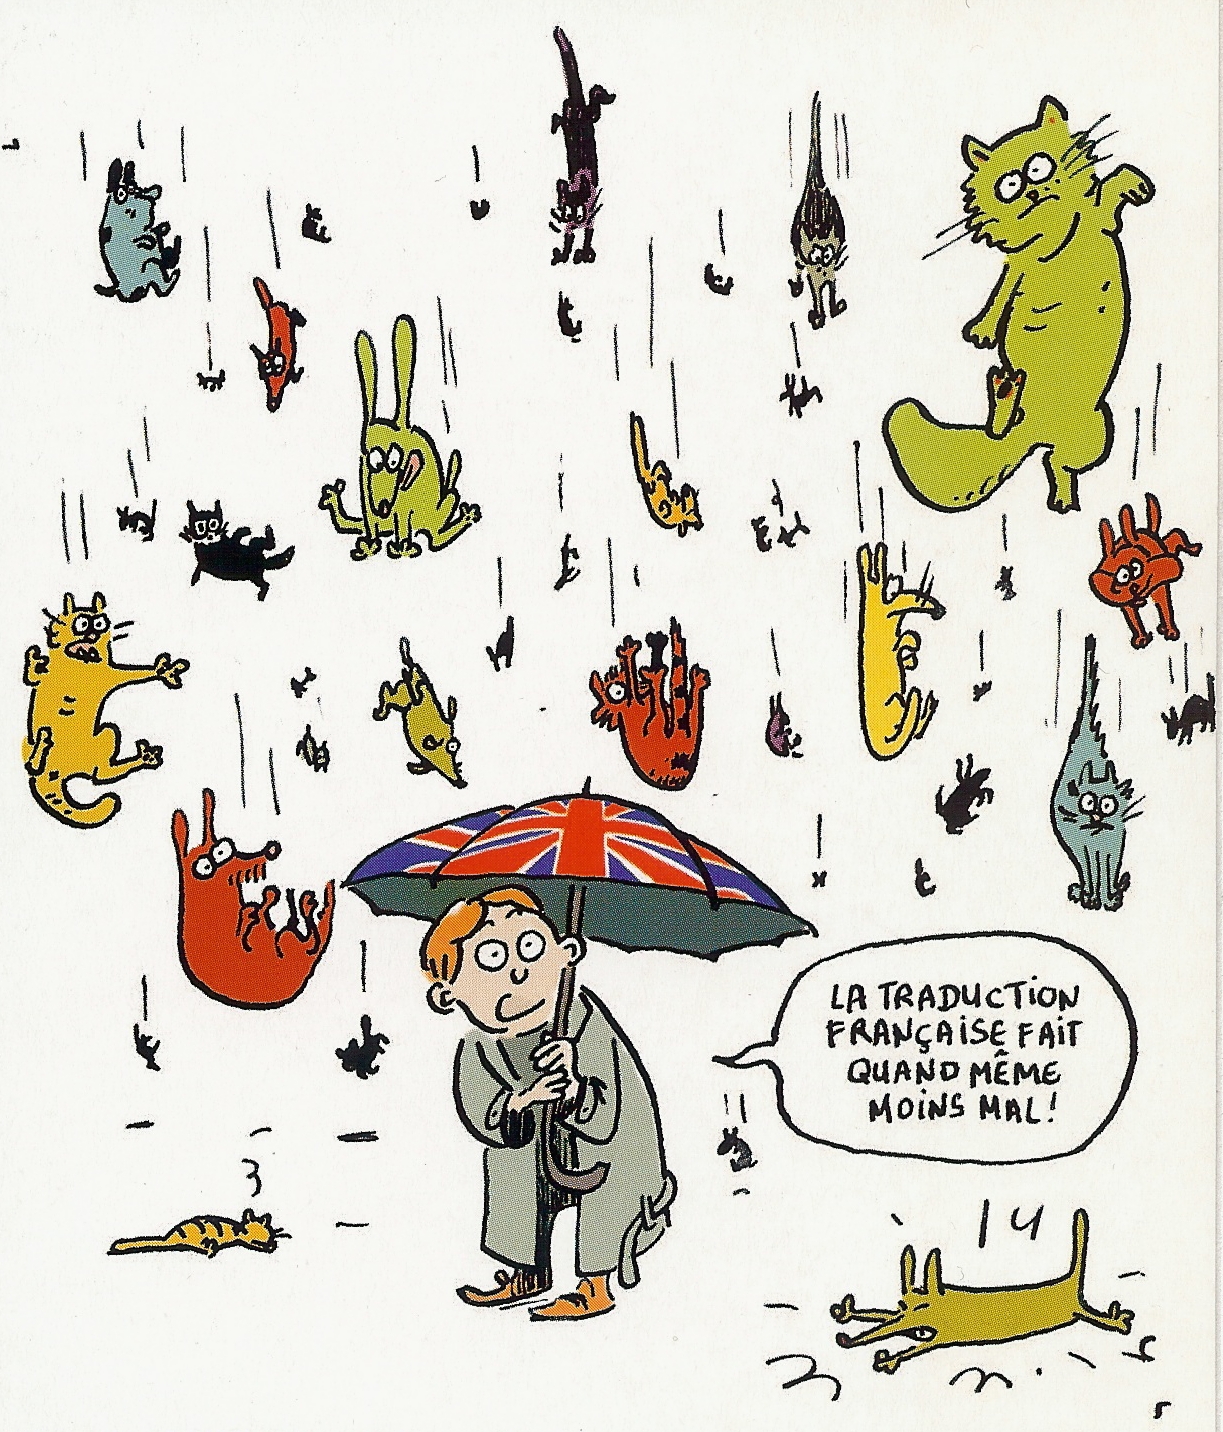 Raining Cats Dogs